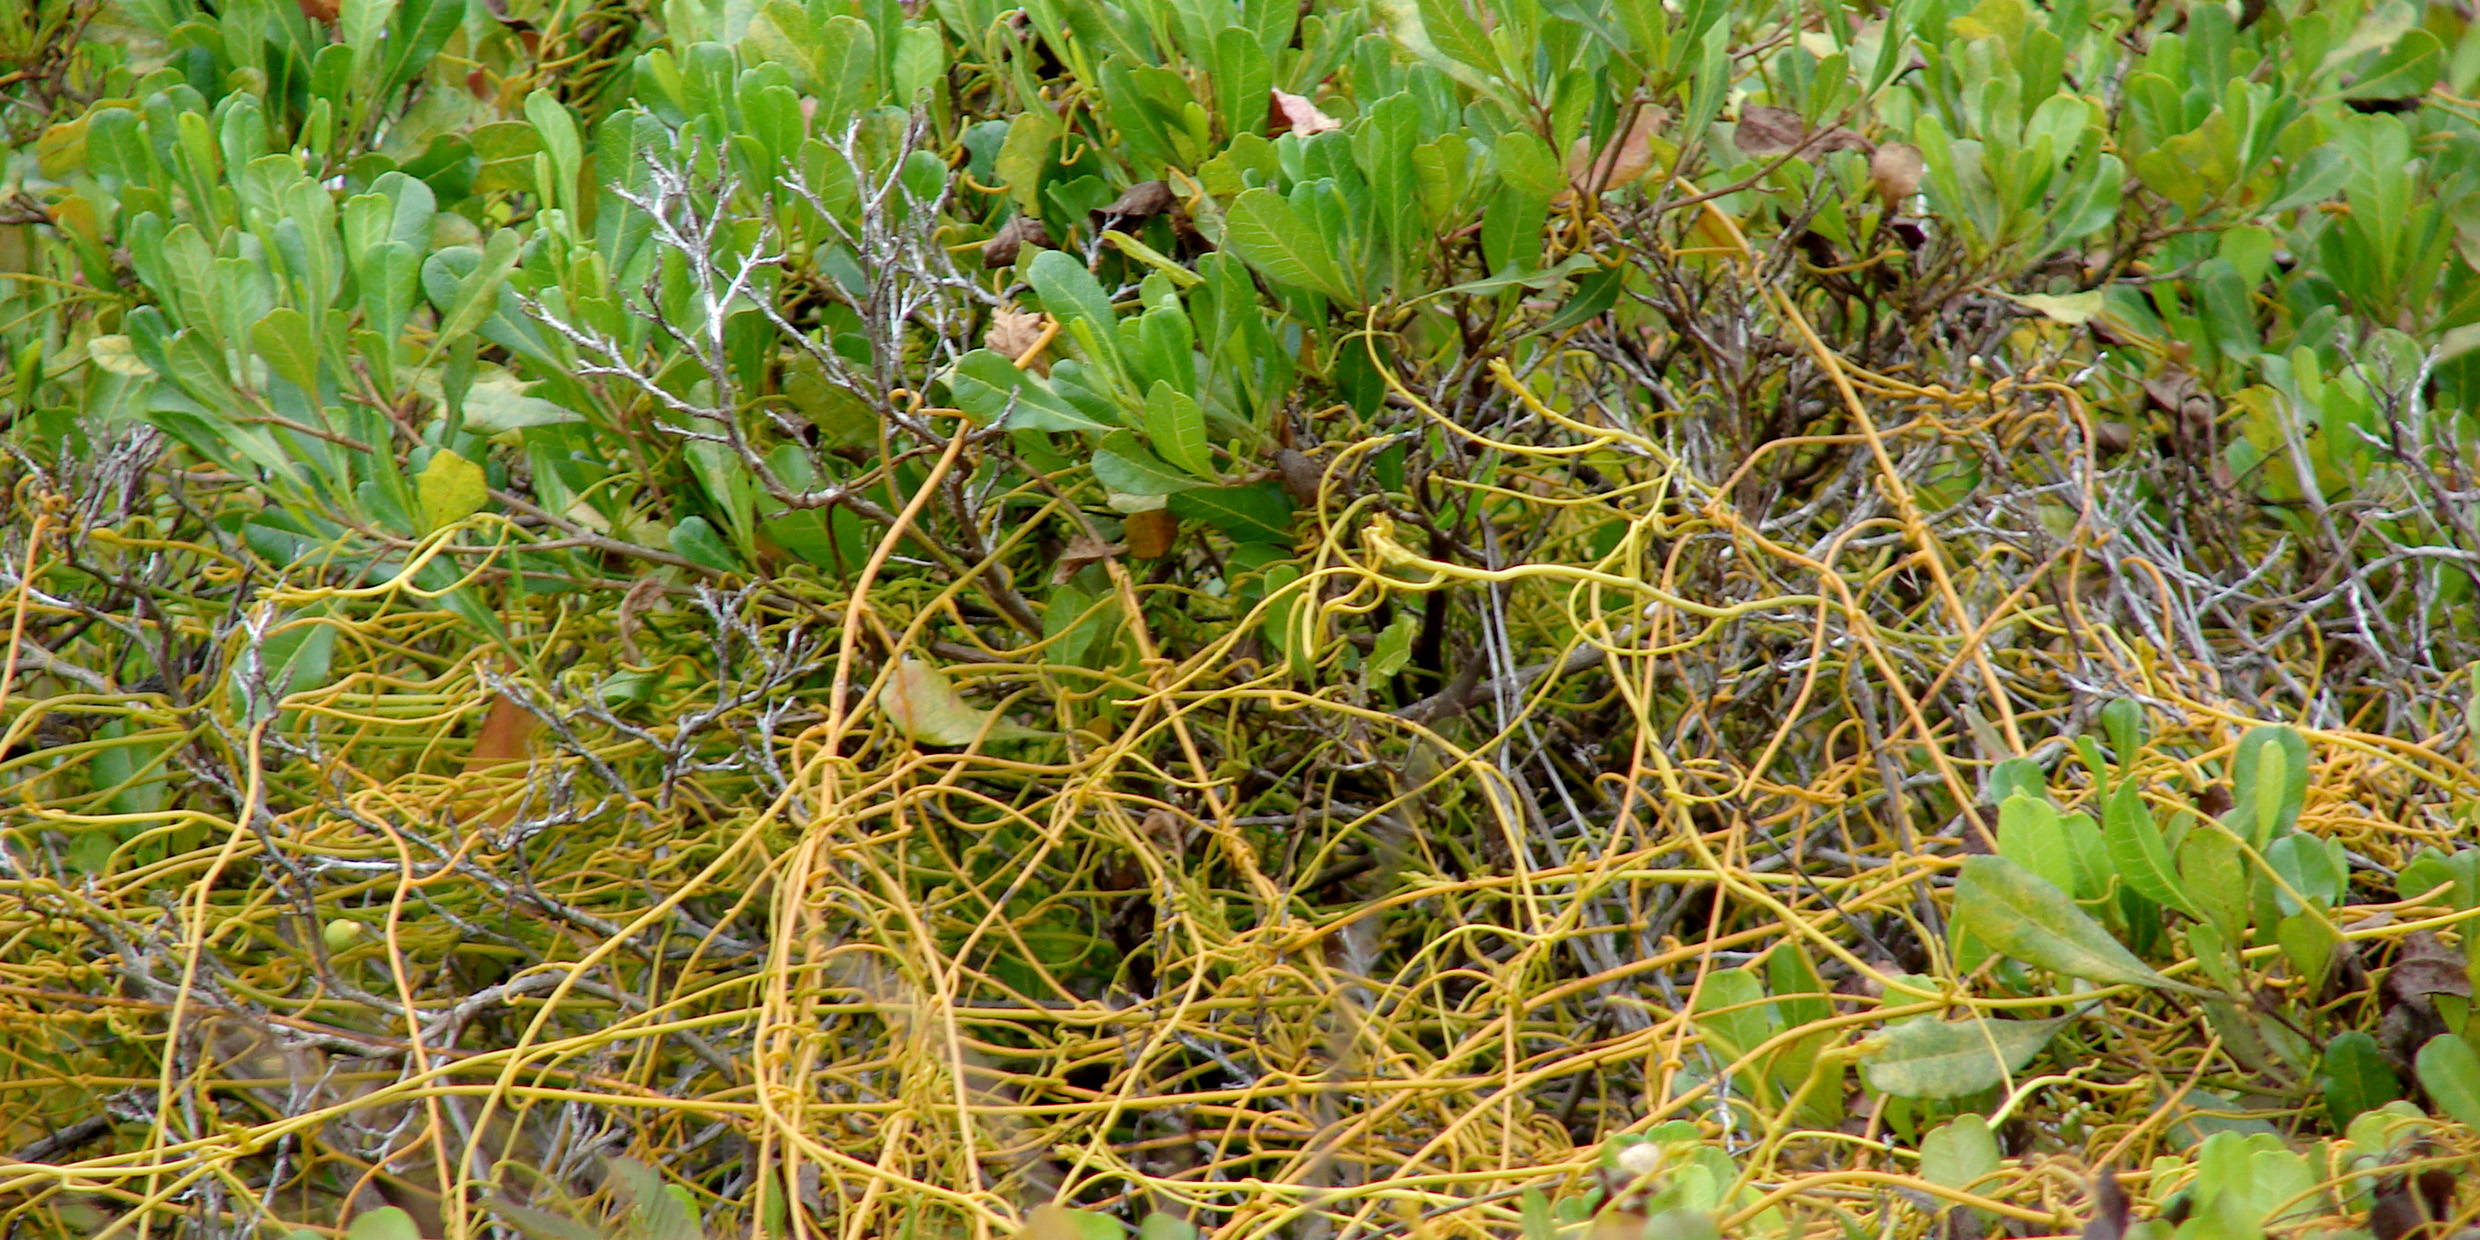 Photo of orange vine tendrils choking a green-leaved plant